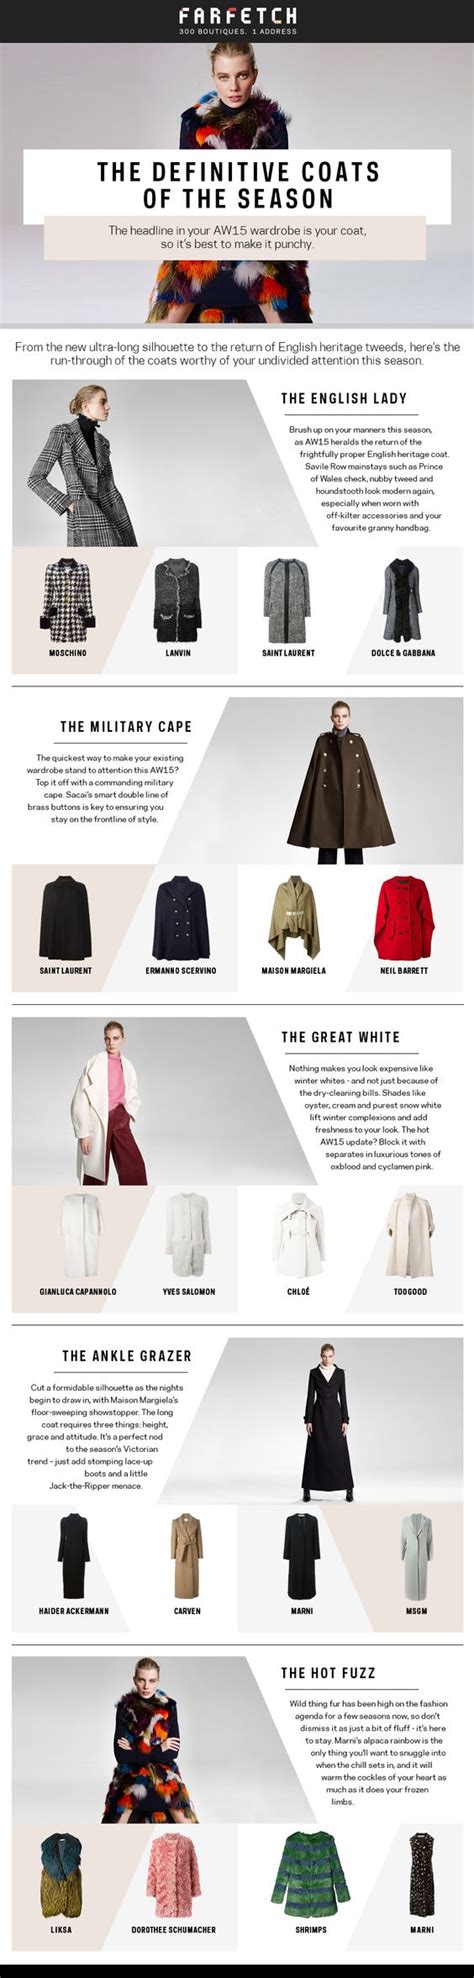 The Definitive Coats Of The Season Infographic Coat Dress Etiquette